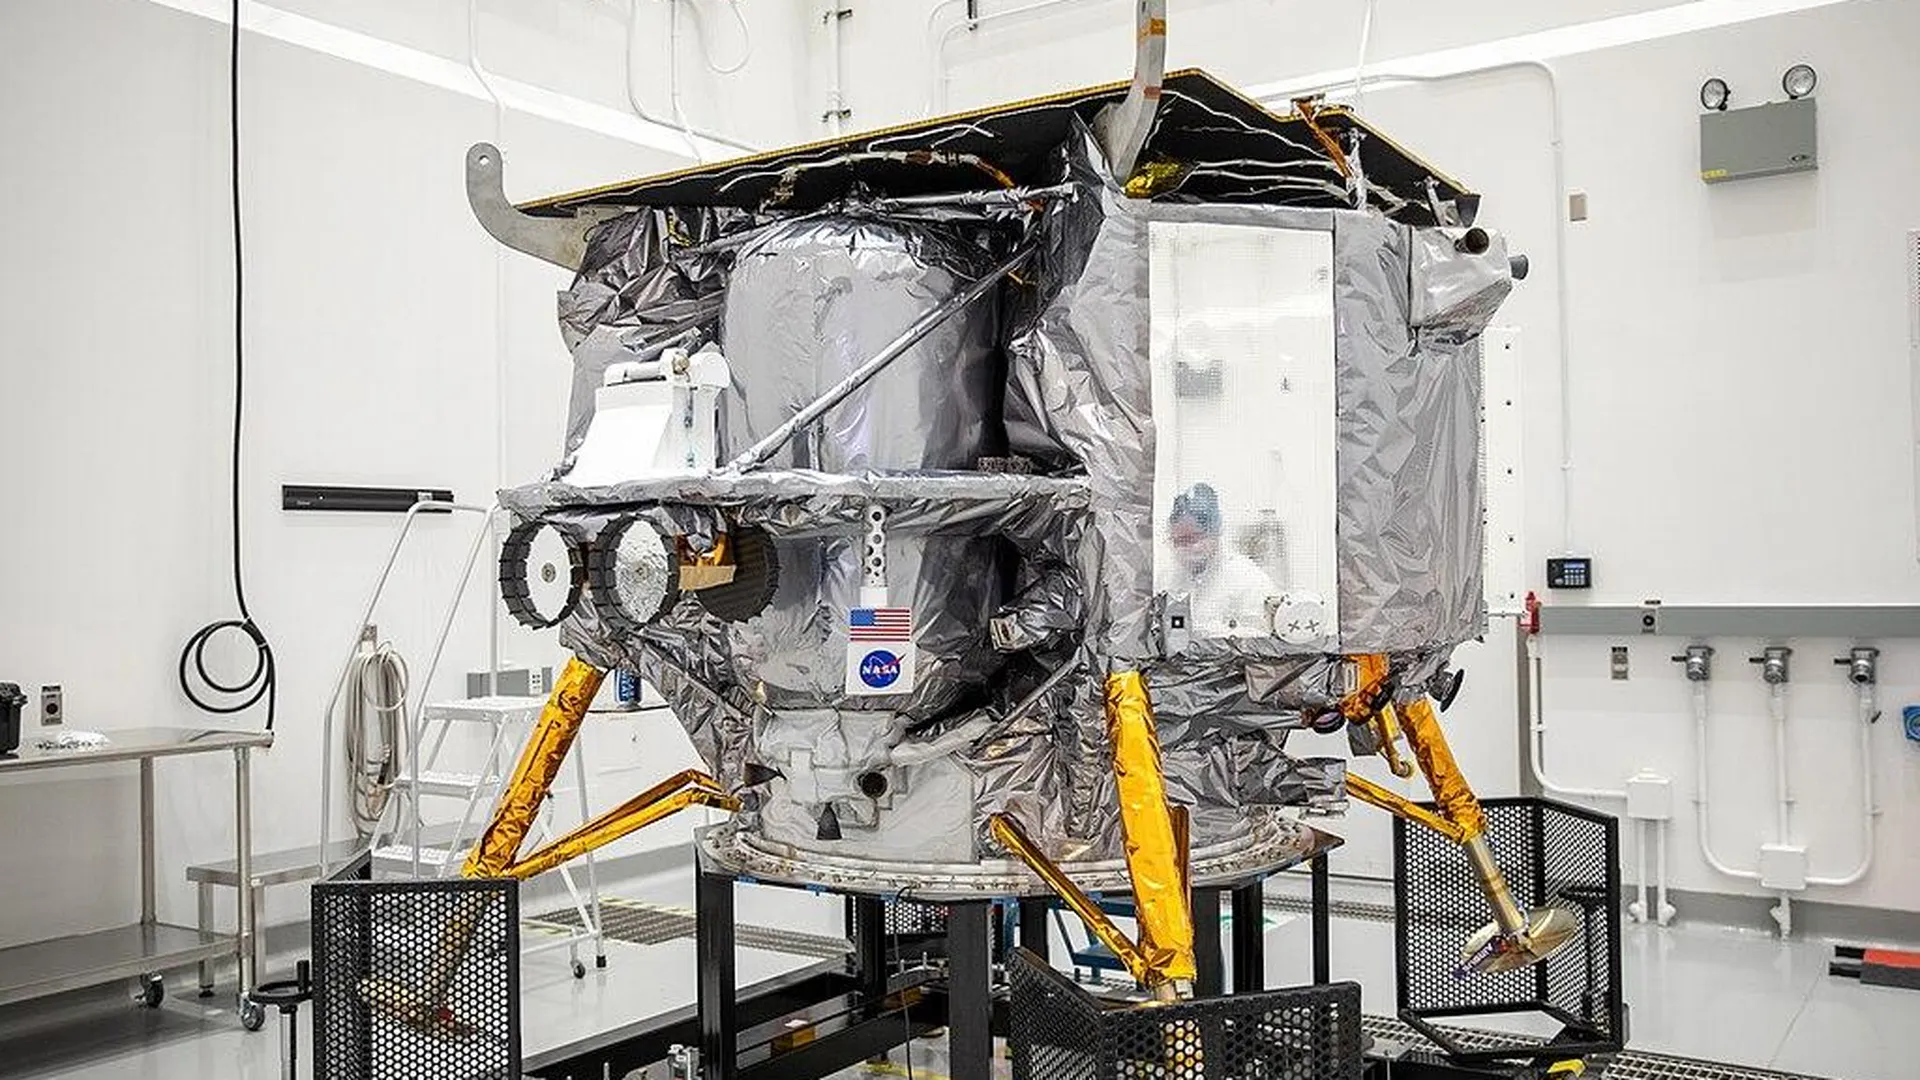 Peregrine — автоматическая межпланетная станция (посадочный модуль), разработанная для американской программы Commercial Lunar Payload Services, компанией Astrobotic Technology / NASA Kennedy Space Center / NASA / Isaac Watson